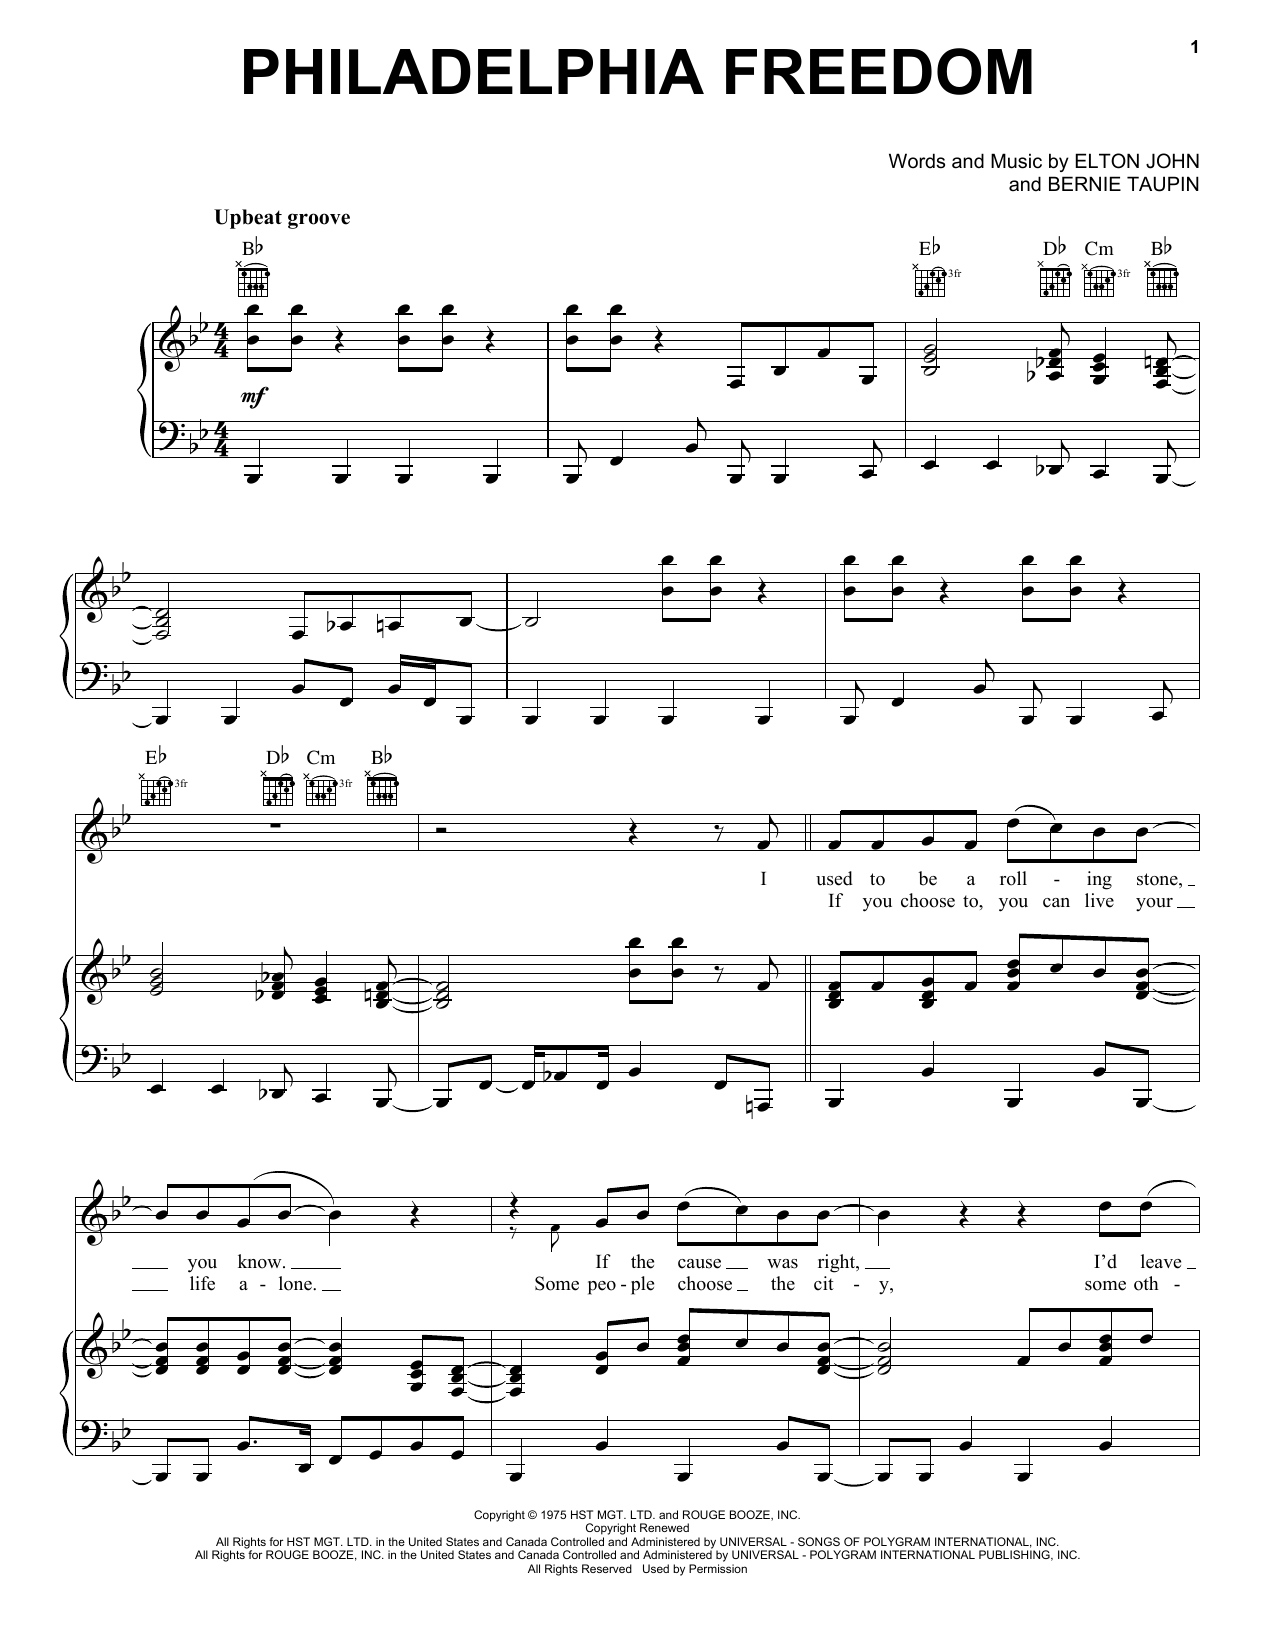 Elton John Philadelphia Freedom Sheet Music Notes & Chords for Piano & Vocal - Download or Print PDF